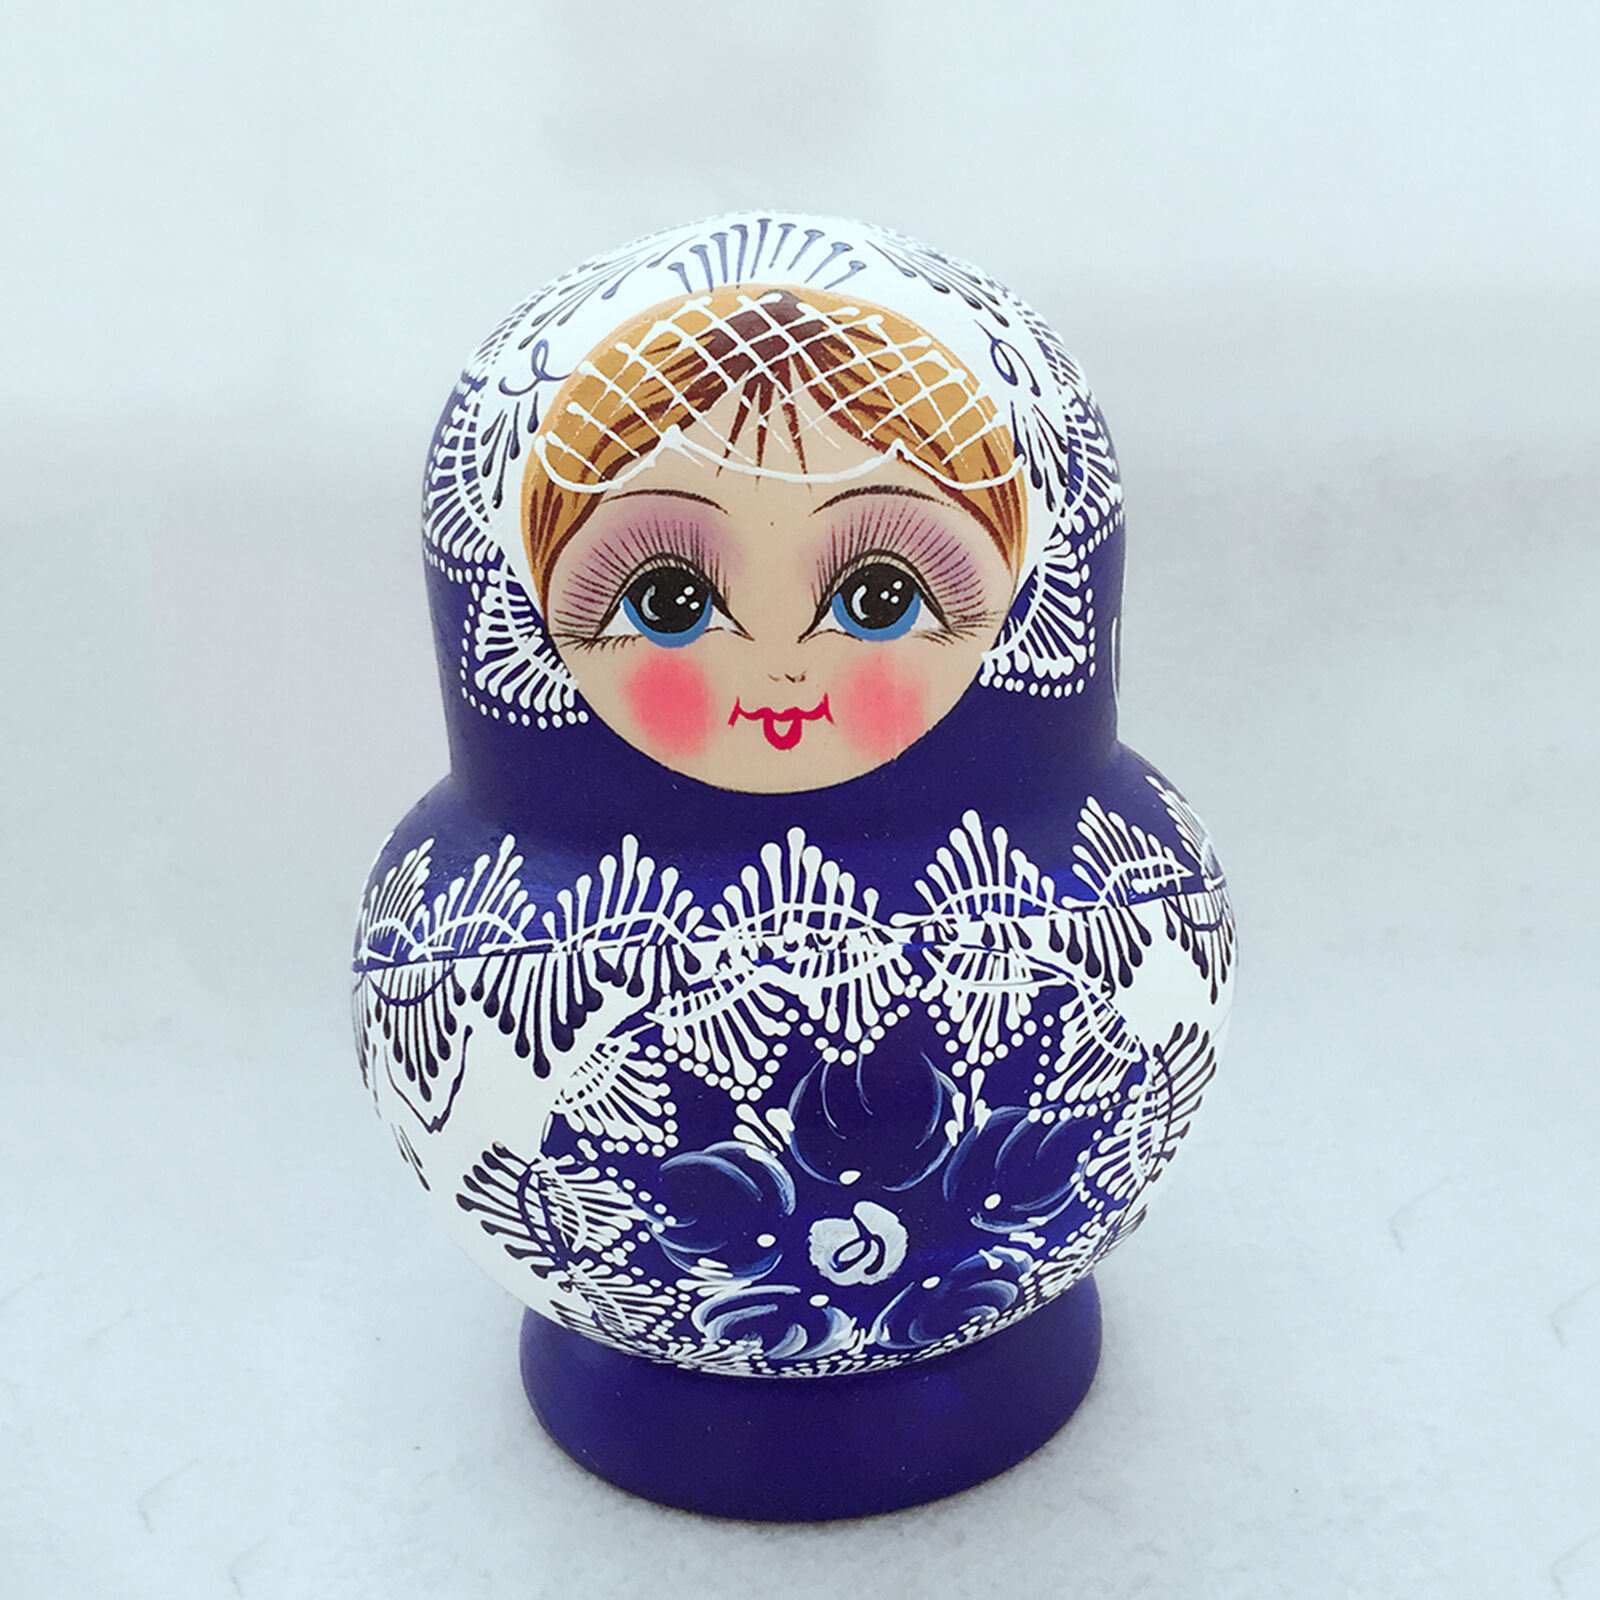 10Pcs/Set Russian Nesting Dolls Matryoshka Wooden Handmade Toy Craft Decor ha